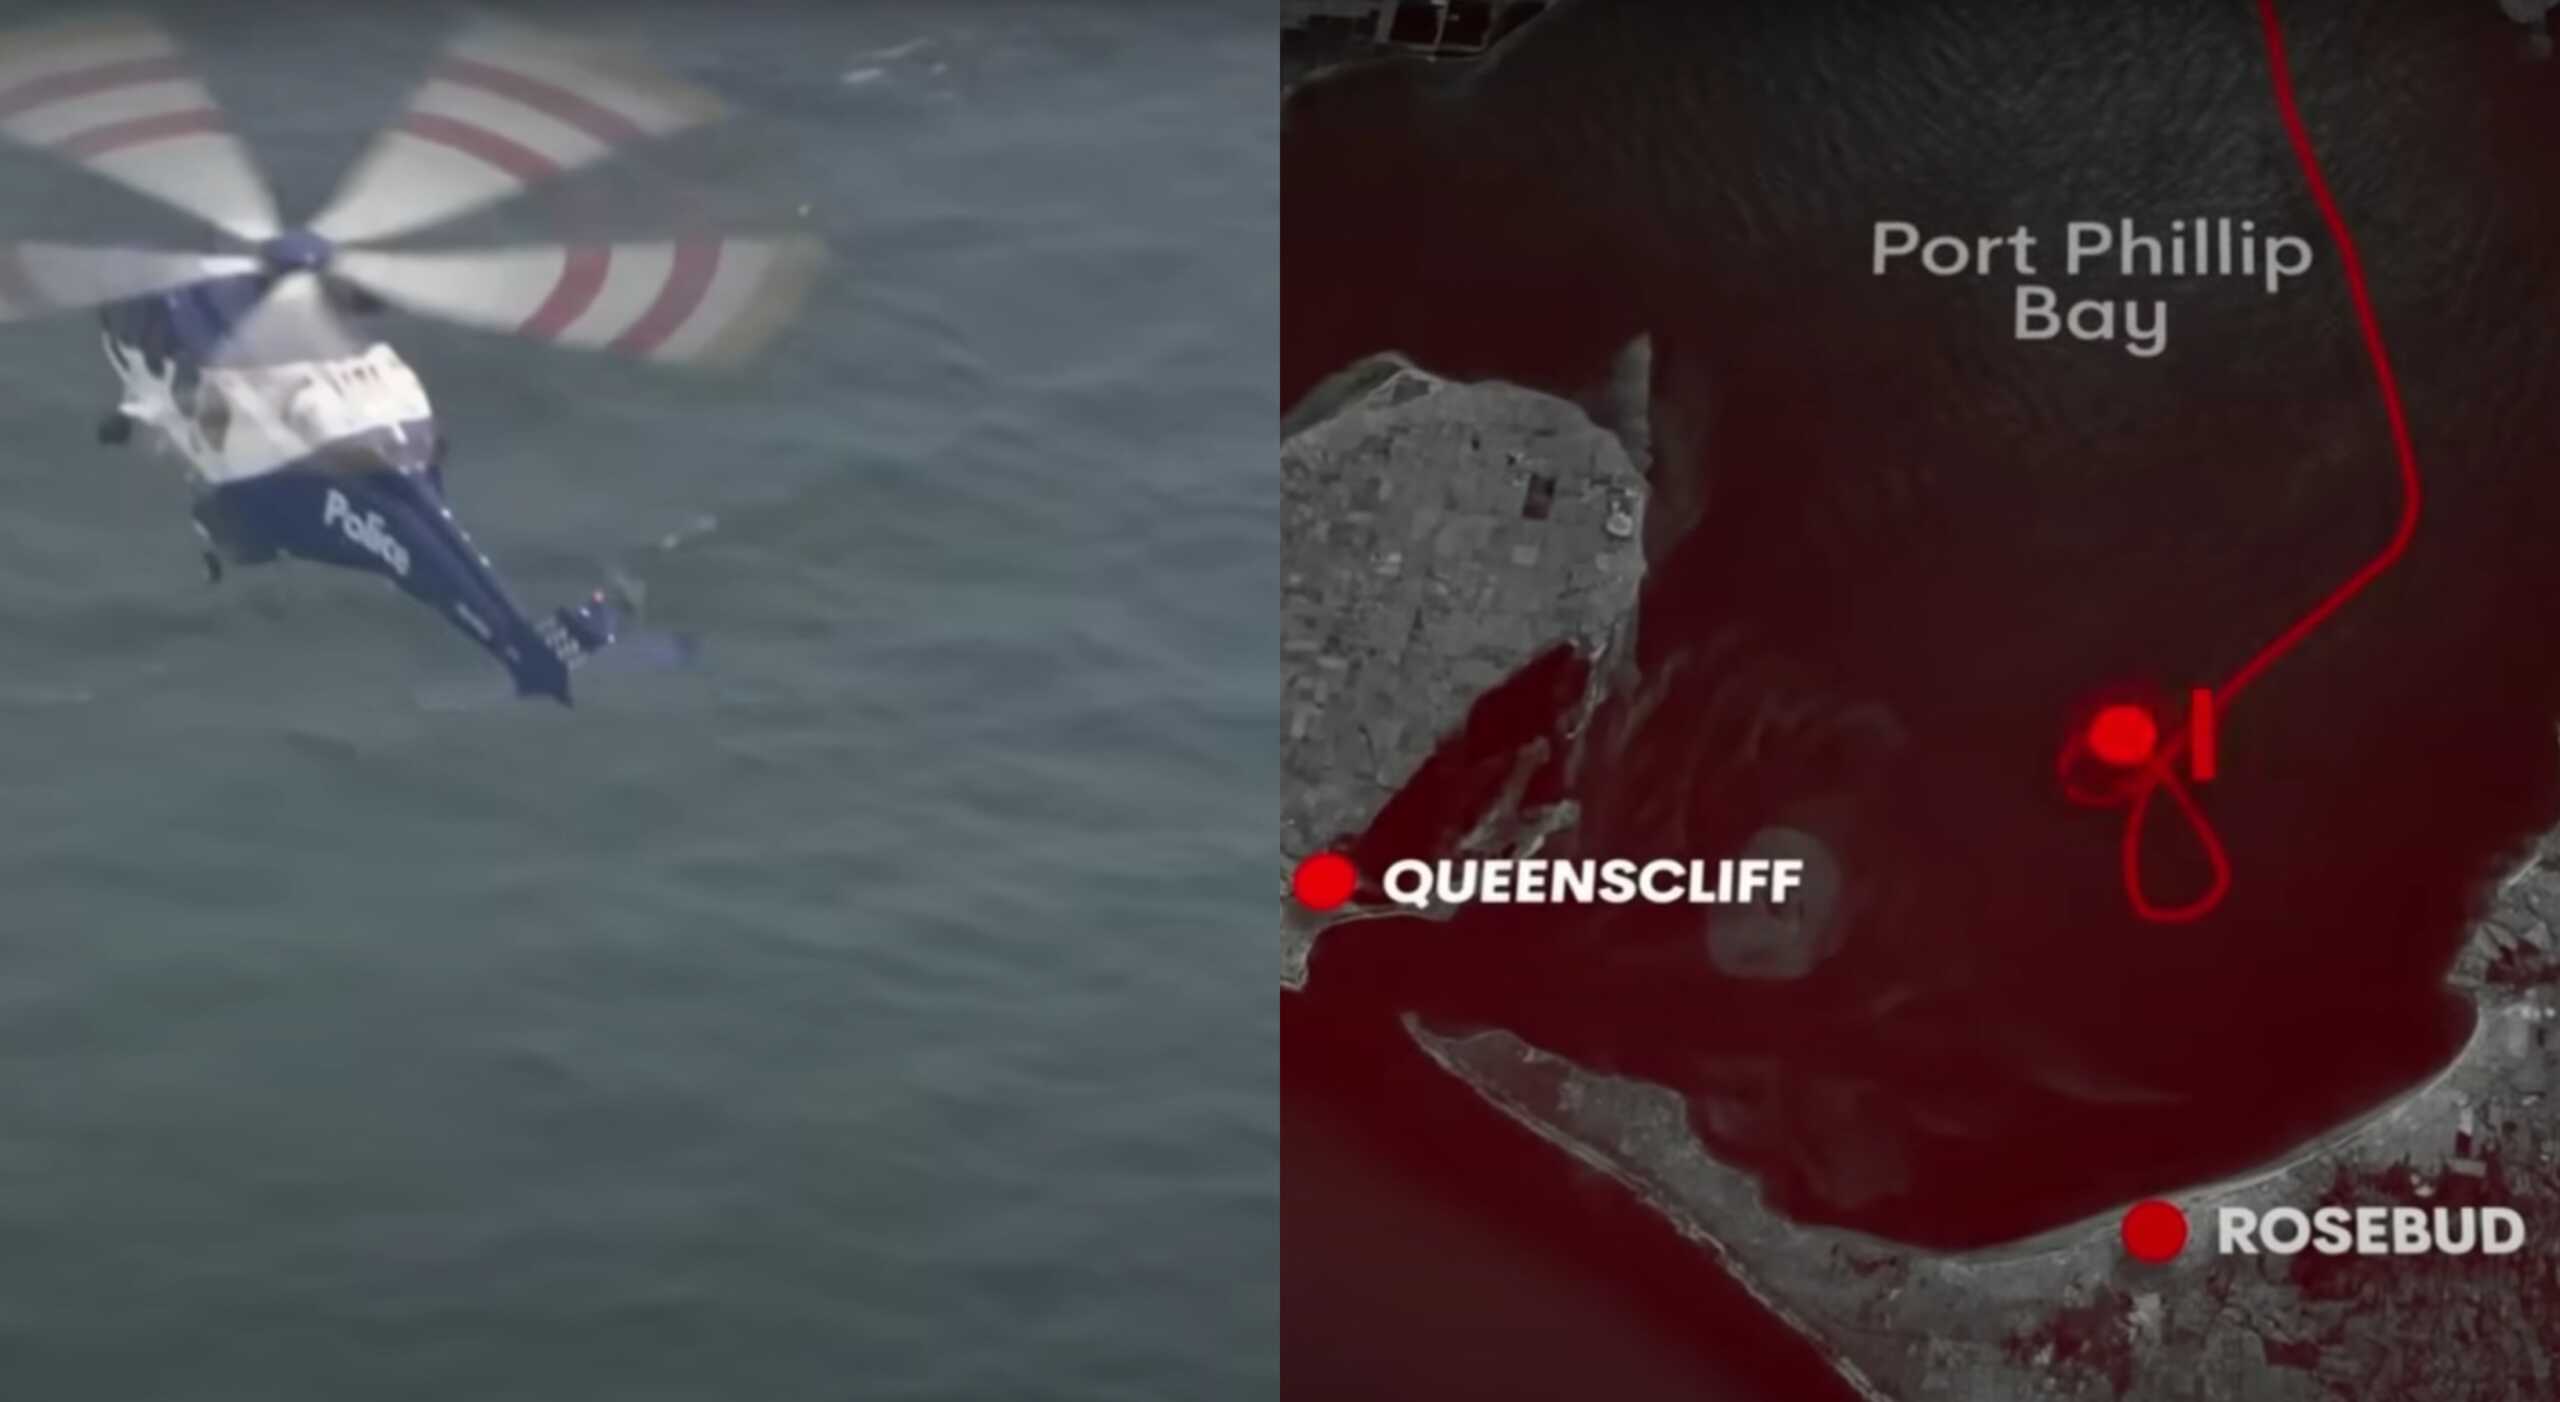 Aυστραλία: Δυο μικρά αεροσκάφη συγκρούστηκαν στον αέρα – Το ένα προσγειώθηκε με ασφάλεια και το άλλο έπεσε στη θάλασσα